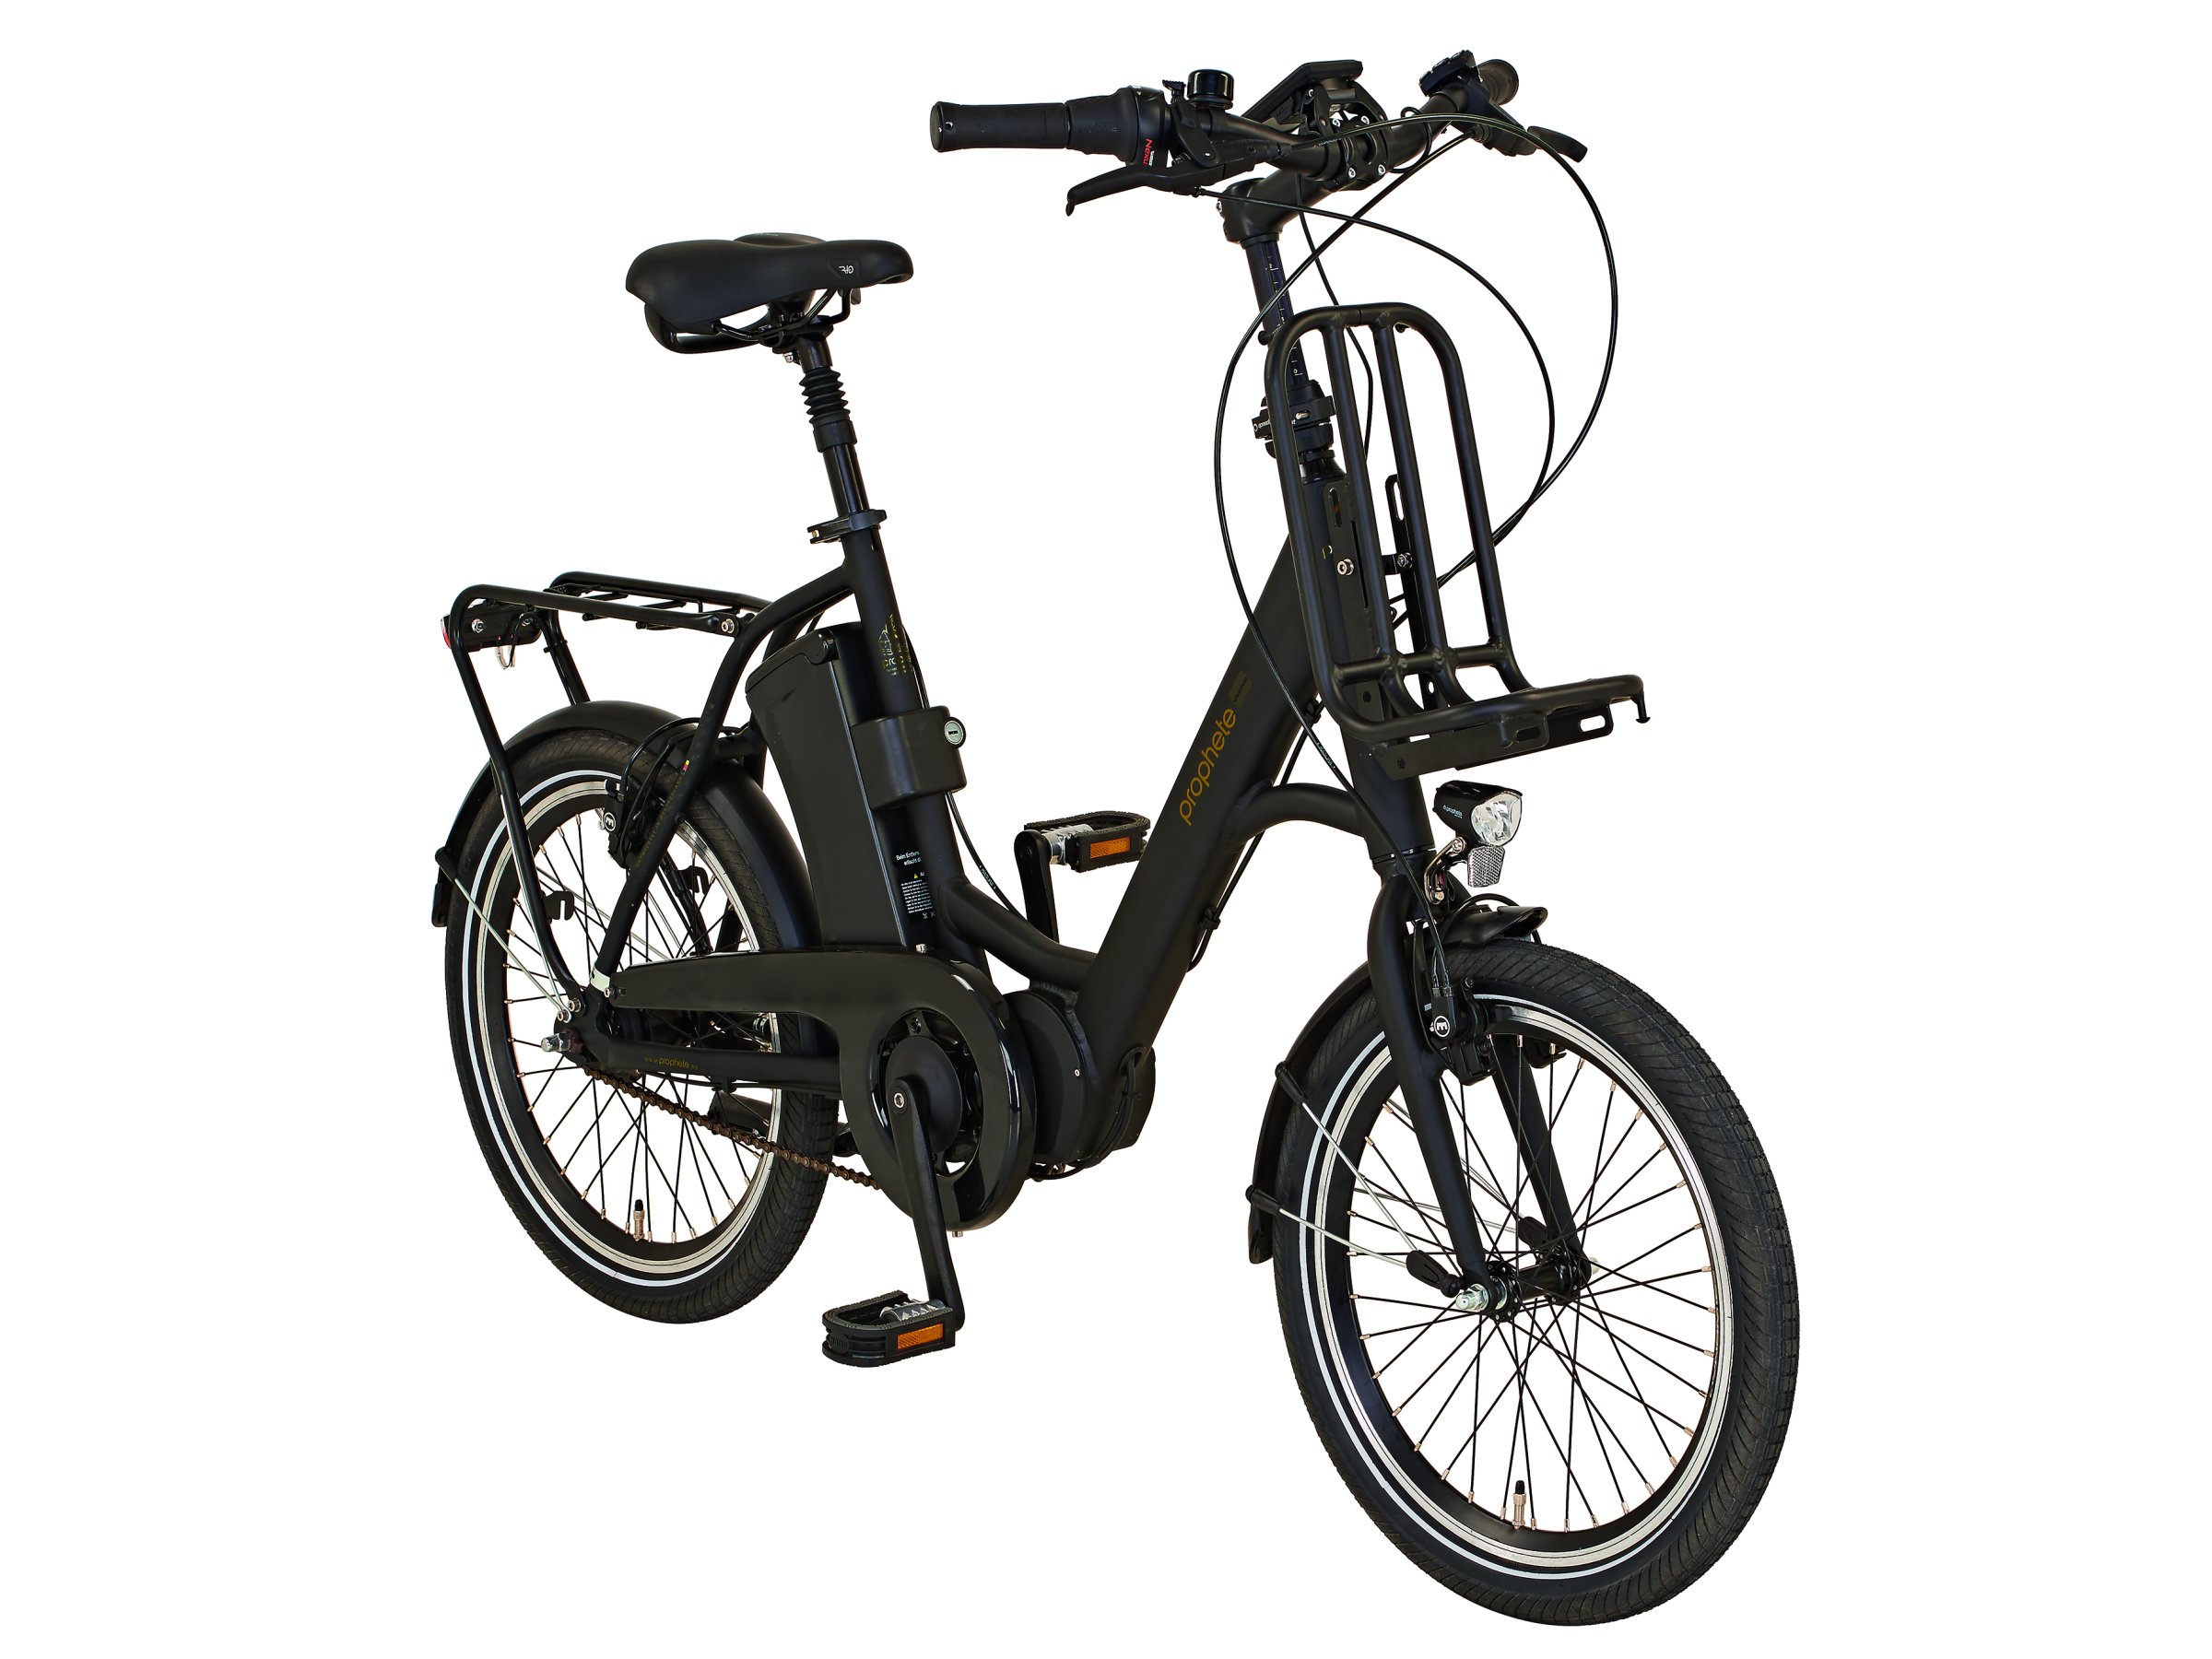 Prophete 20.ETU.10 Kompakt E-Bike 20Zoll|Online kaufen - 2.399,95 eBike-Haus.d, €